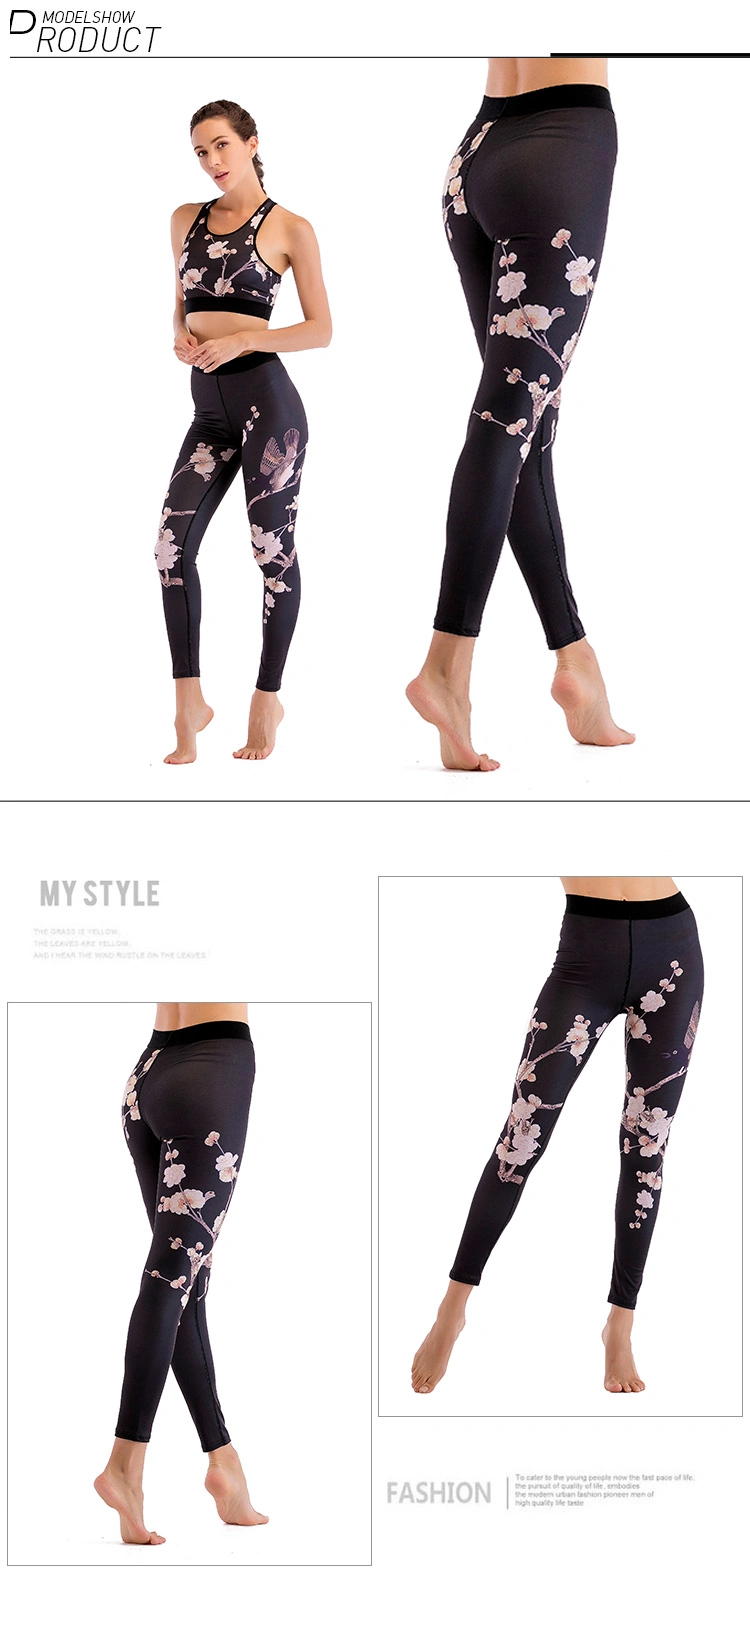 Cody Lundin Women Clothes Sports Apparel Gym Wear Tight Yoga Pants